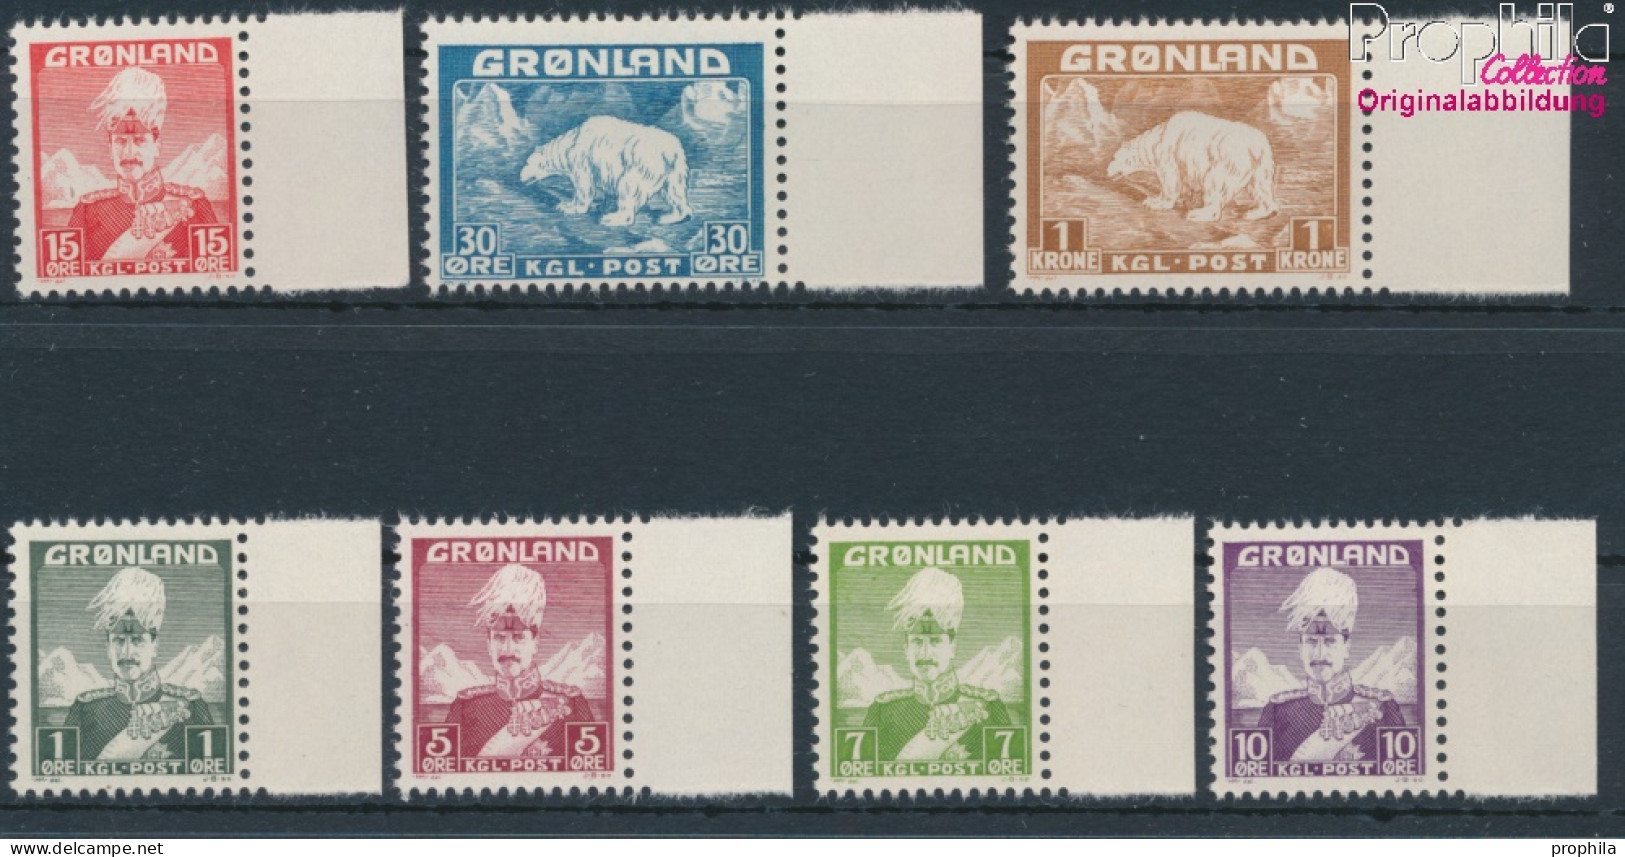 Dänemark - Grönland Postfrisch Christian X. 1938 König Christian X.  (10174193 - Gebraucht